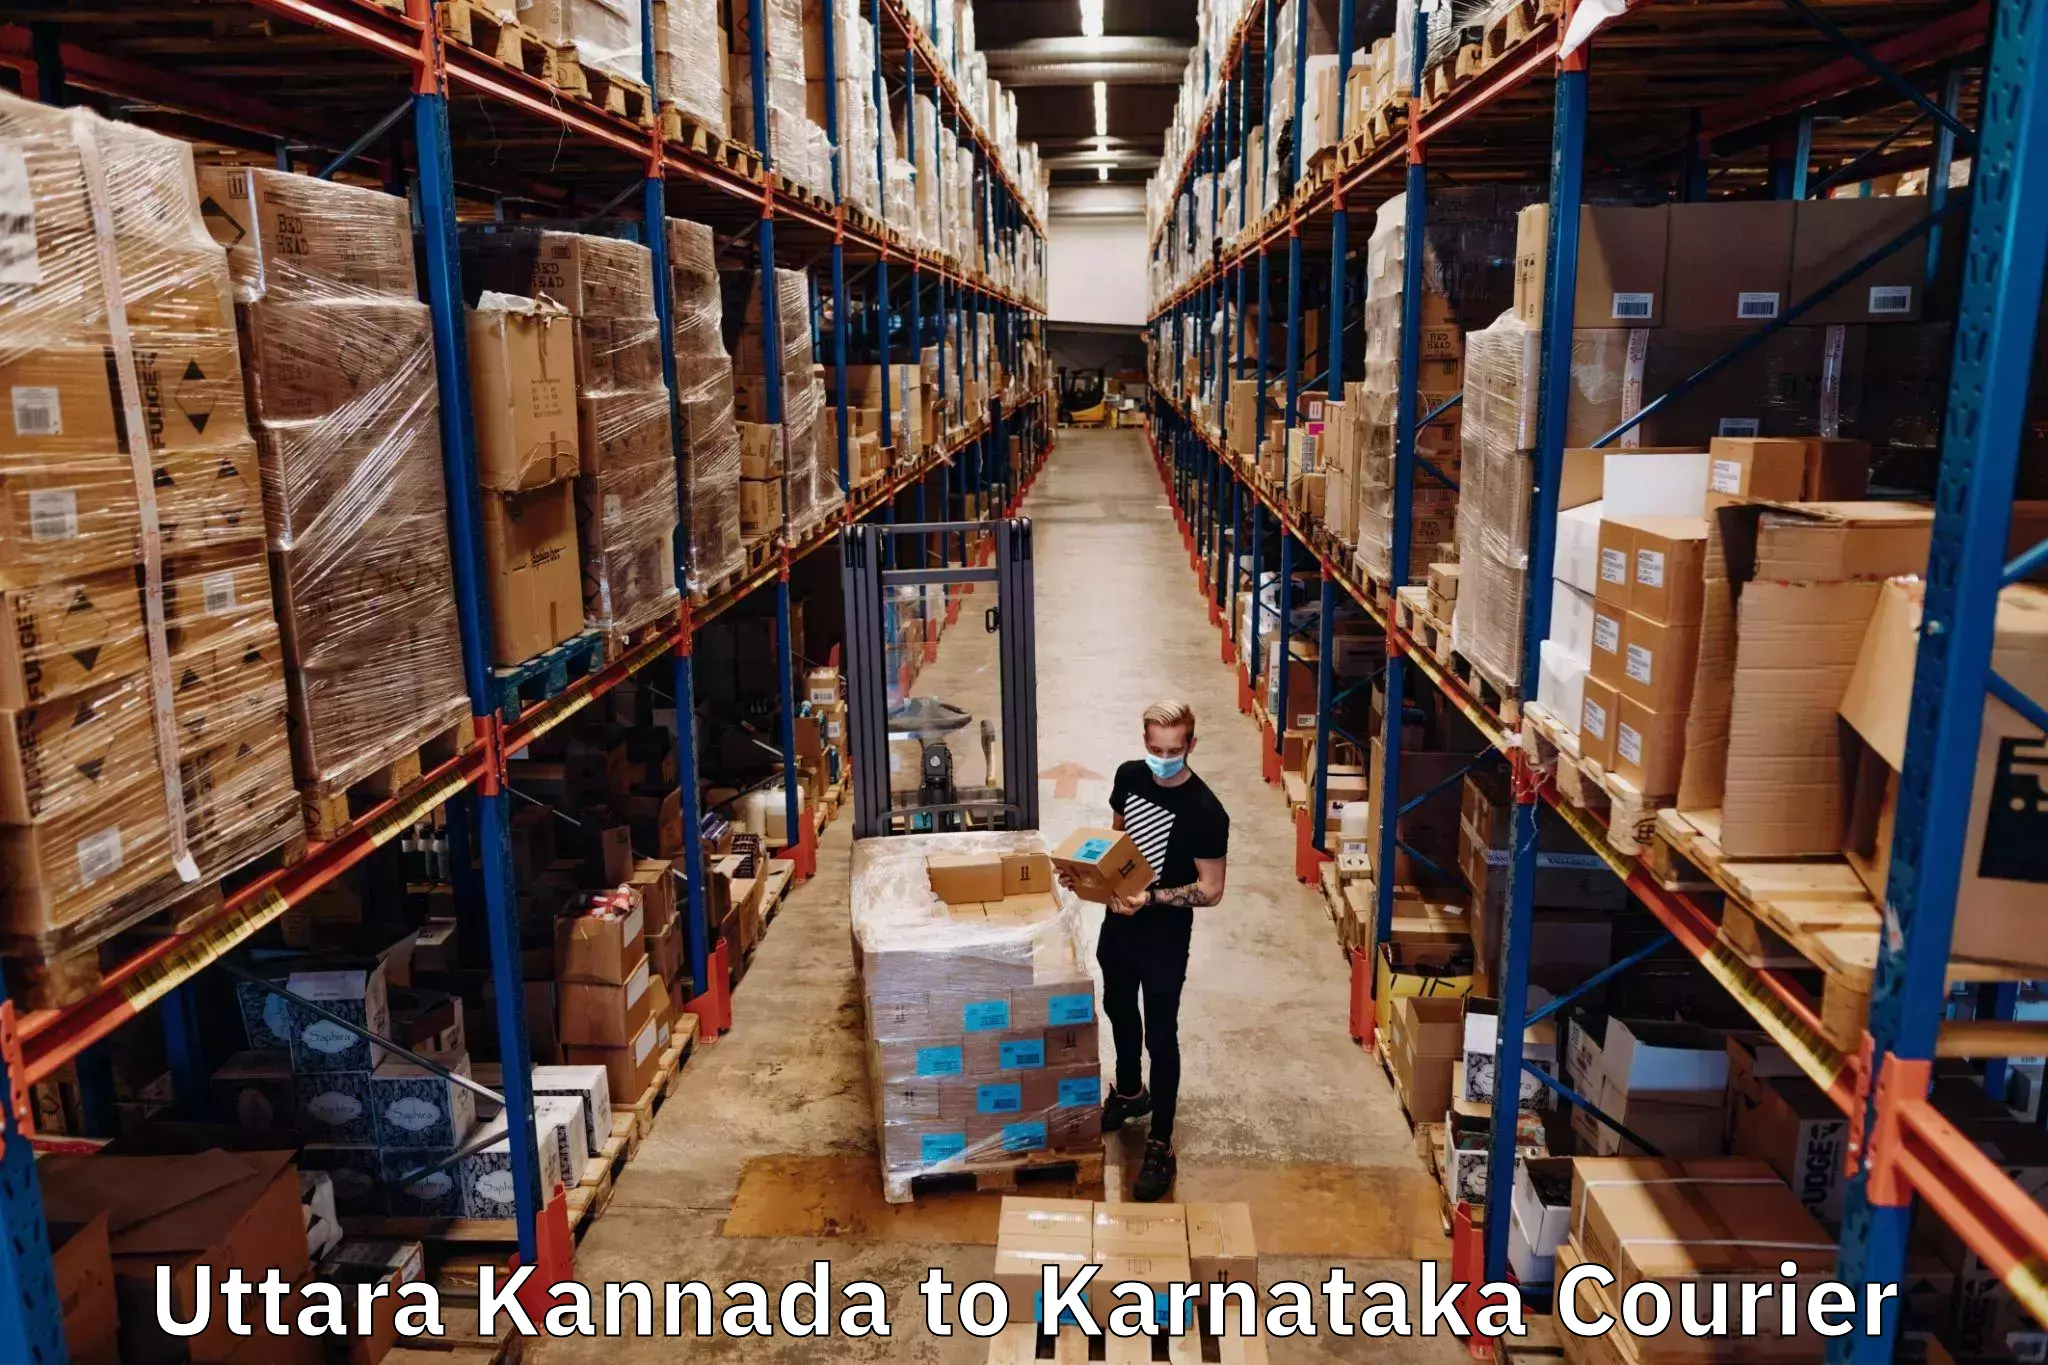 Doorstep delivery service Uttara Kannada to Yellare